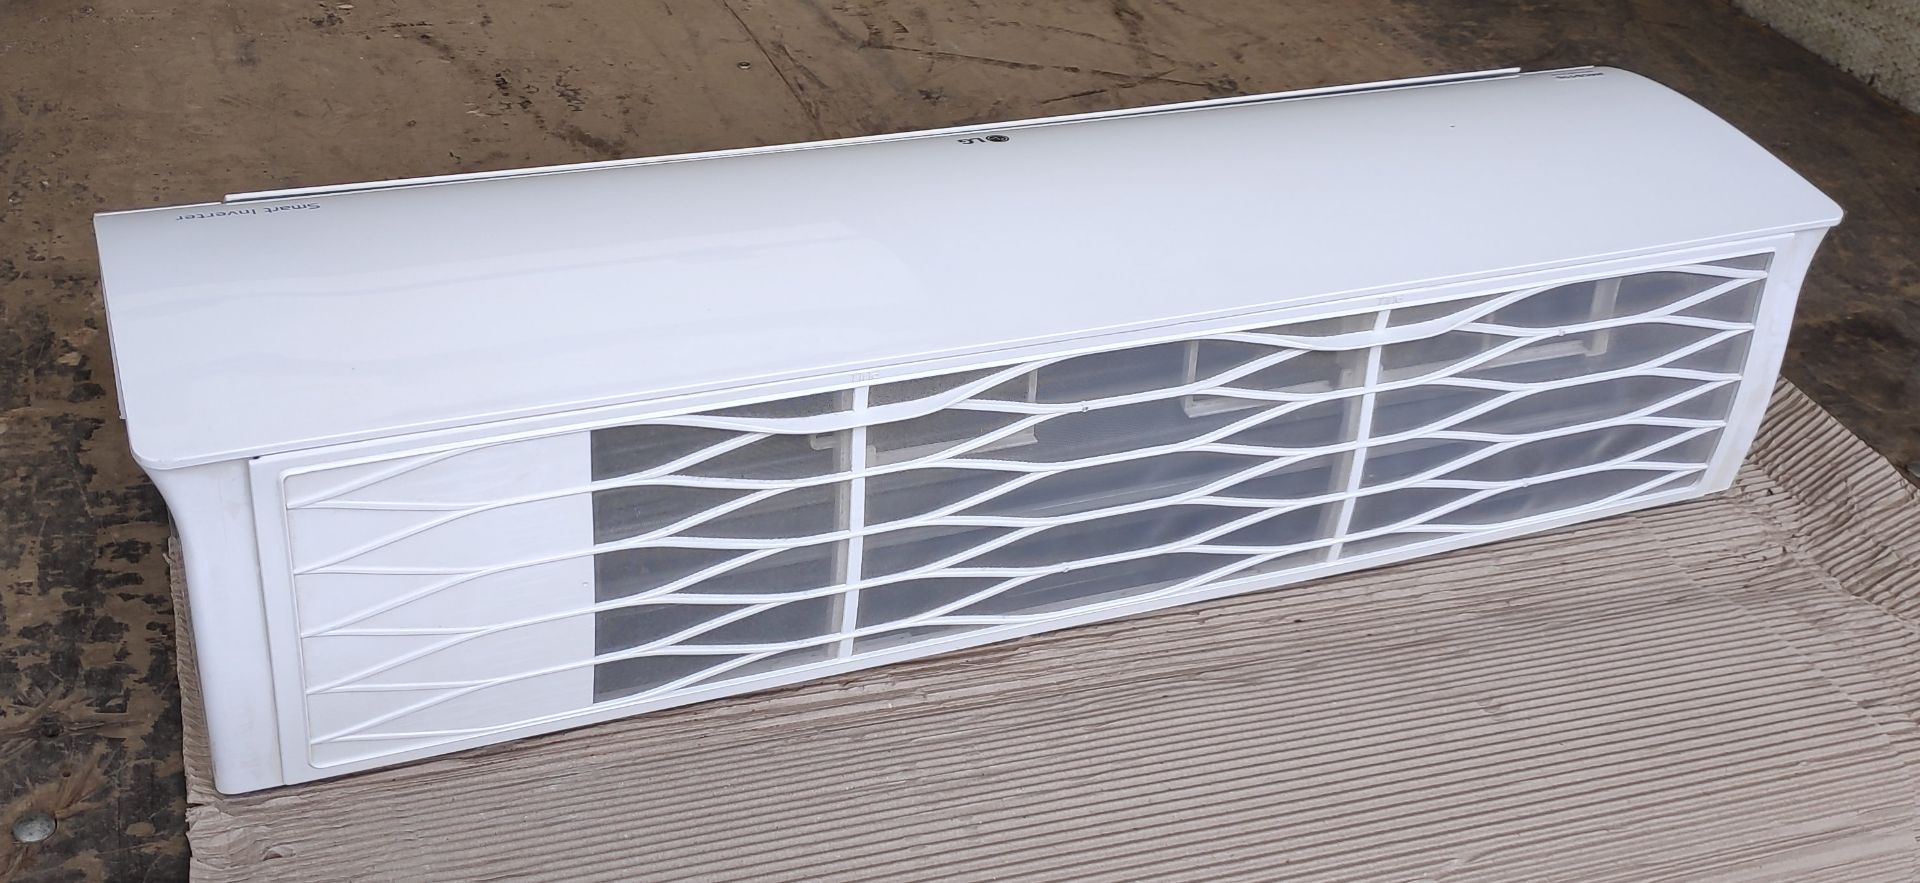 1 x LG Wall Mounted Air Conditioner Smart Inverter Indoor Unit - Model P18EN.NSK - JMCS116 - - Image 3 of 10